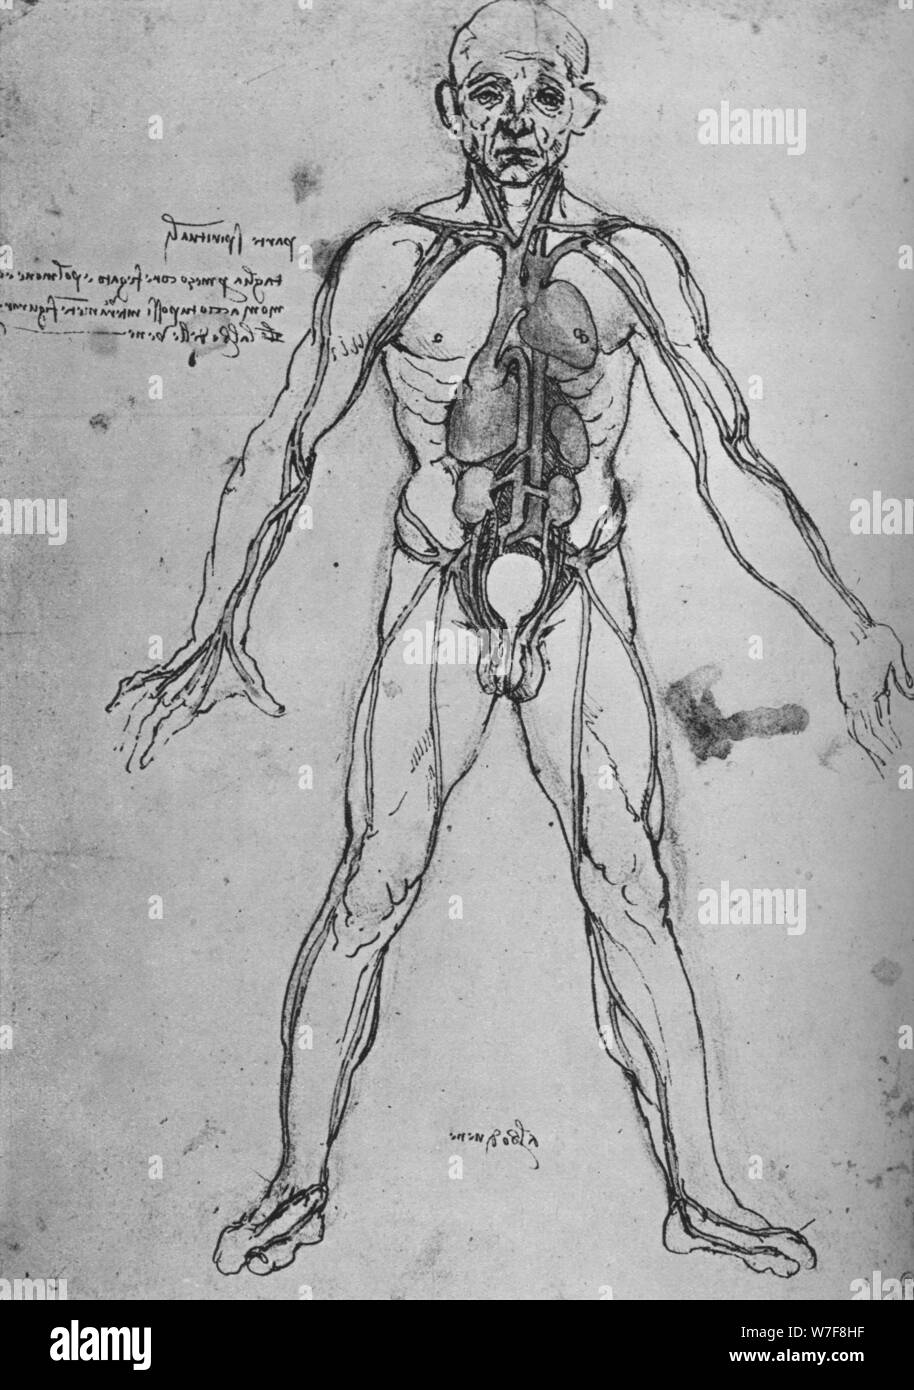 'Man Drawn as an Anatomical Figure to Show the Heart, Lungs and Main Arteries', c1480 (1945). Artist: Leonardo da Vinci. Stock Photo